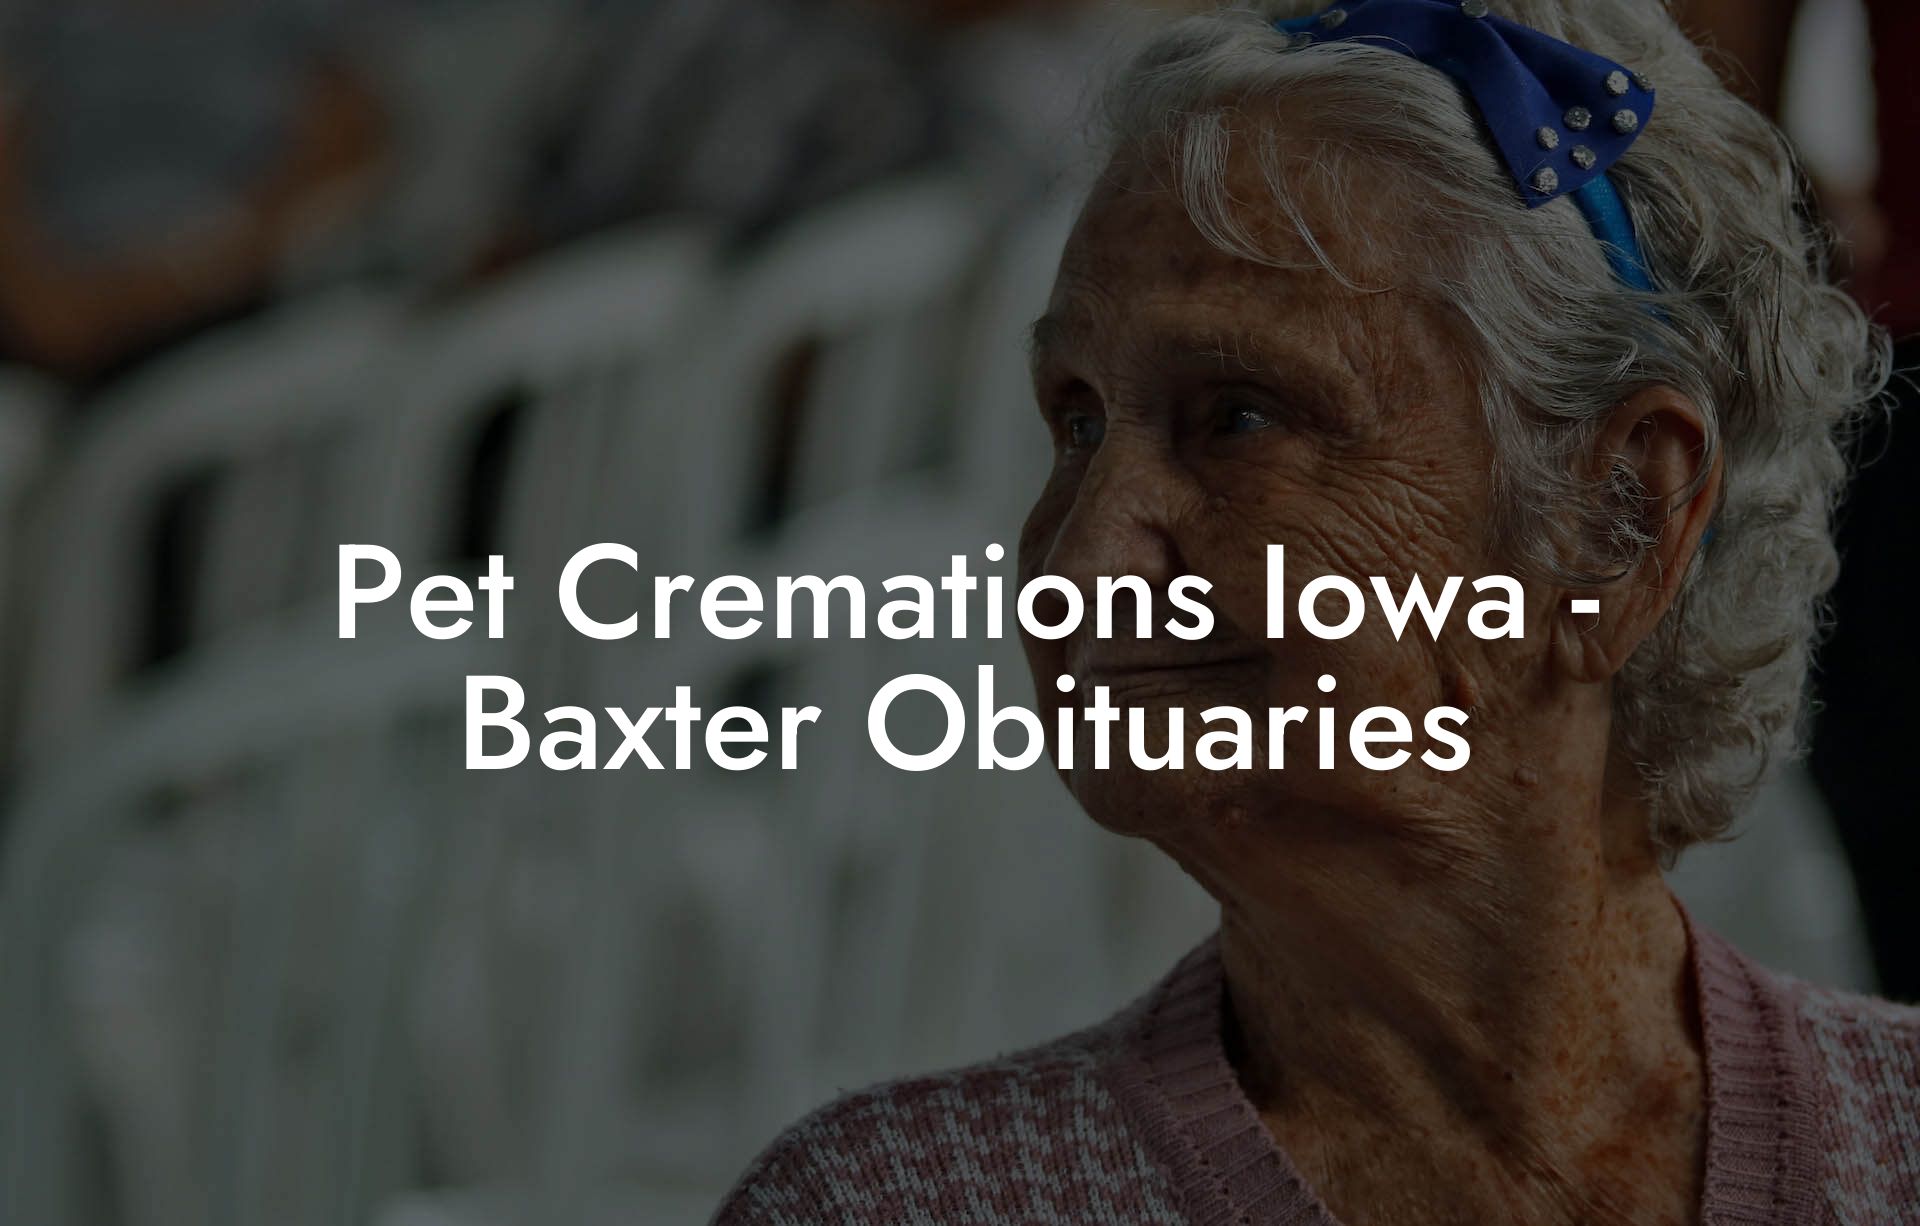 Pet Cremations Iowa - Baxter Obituaries